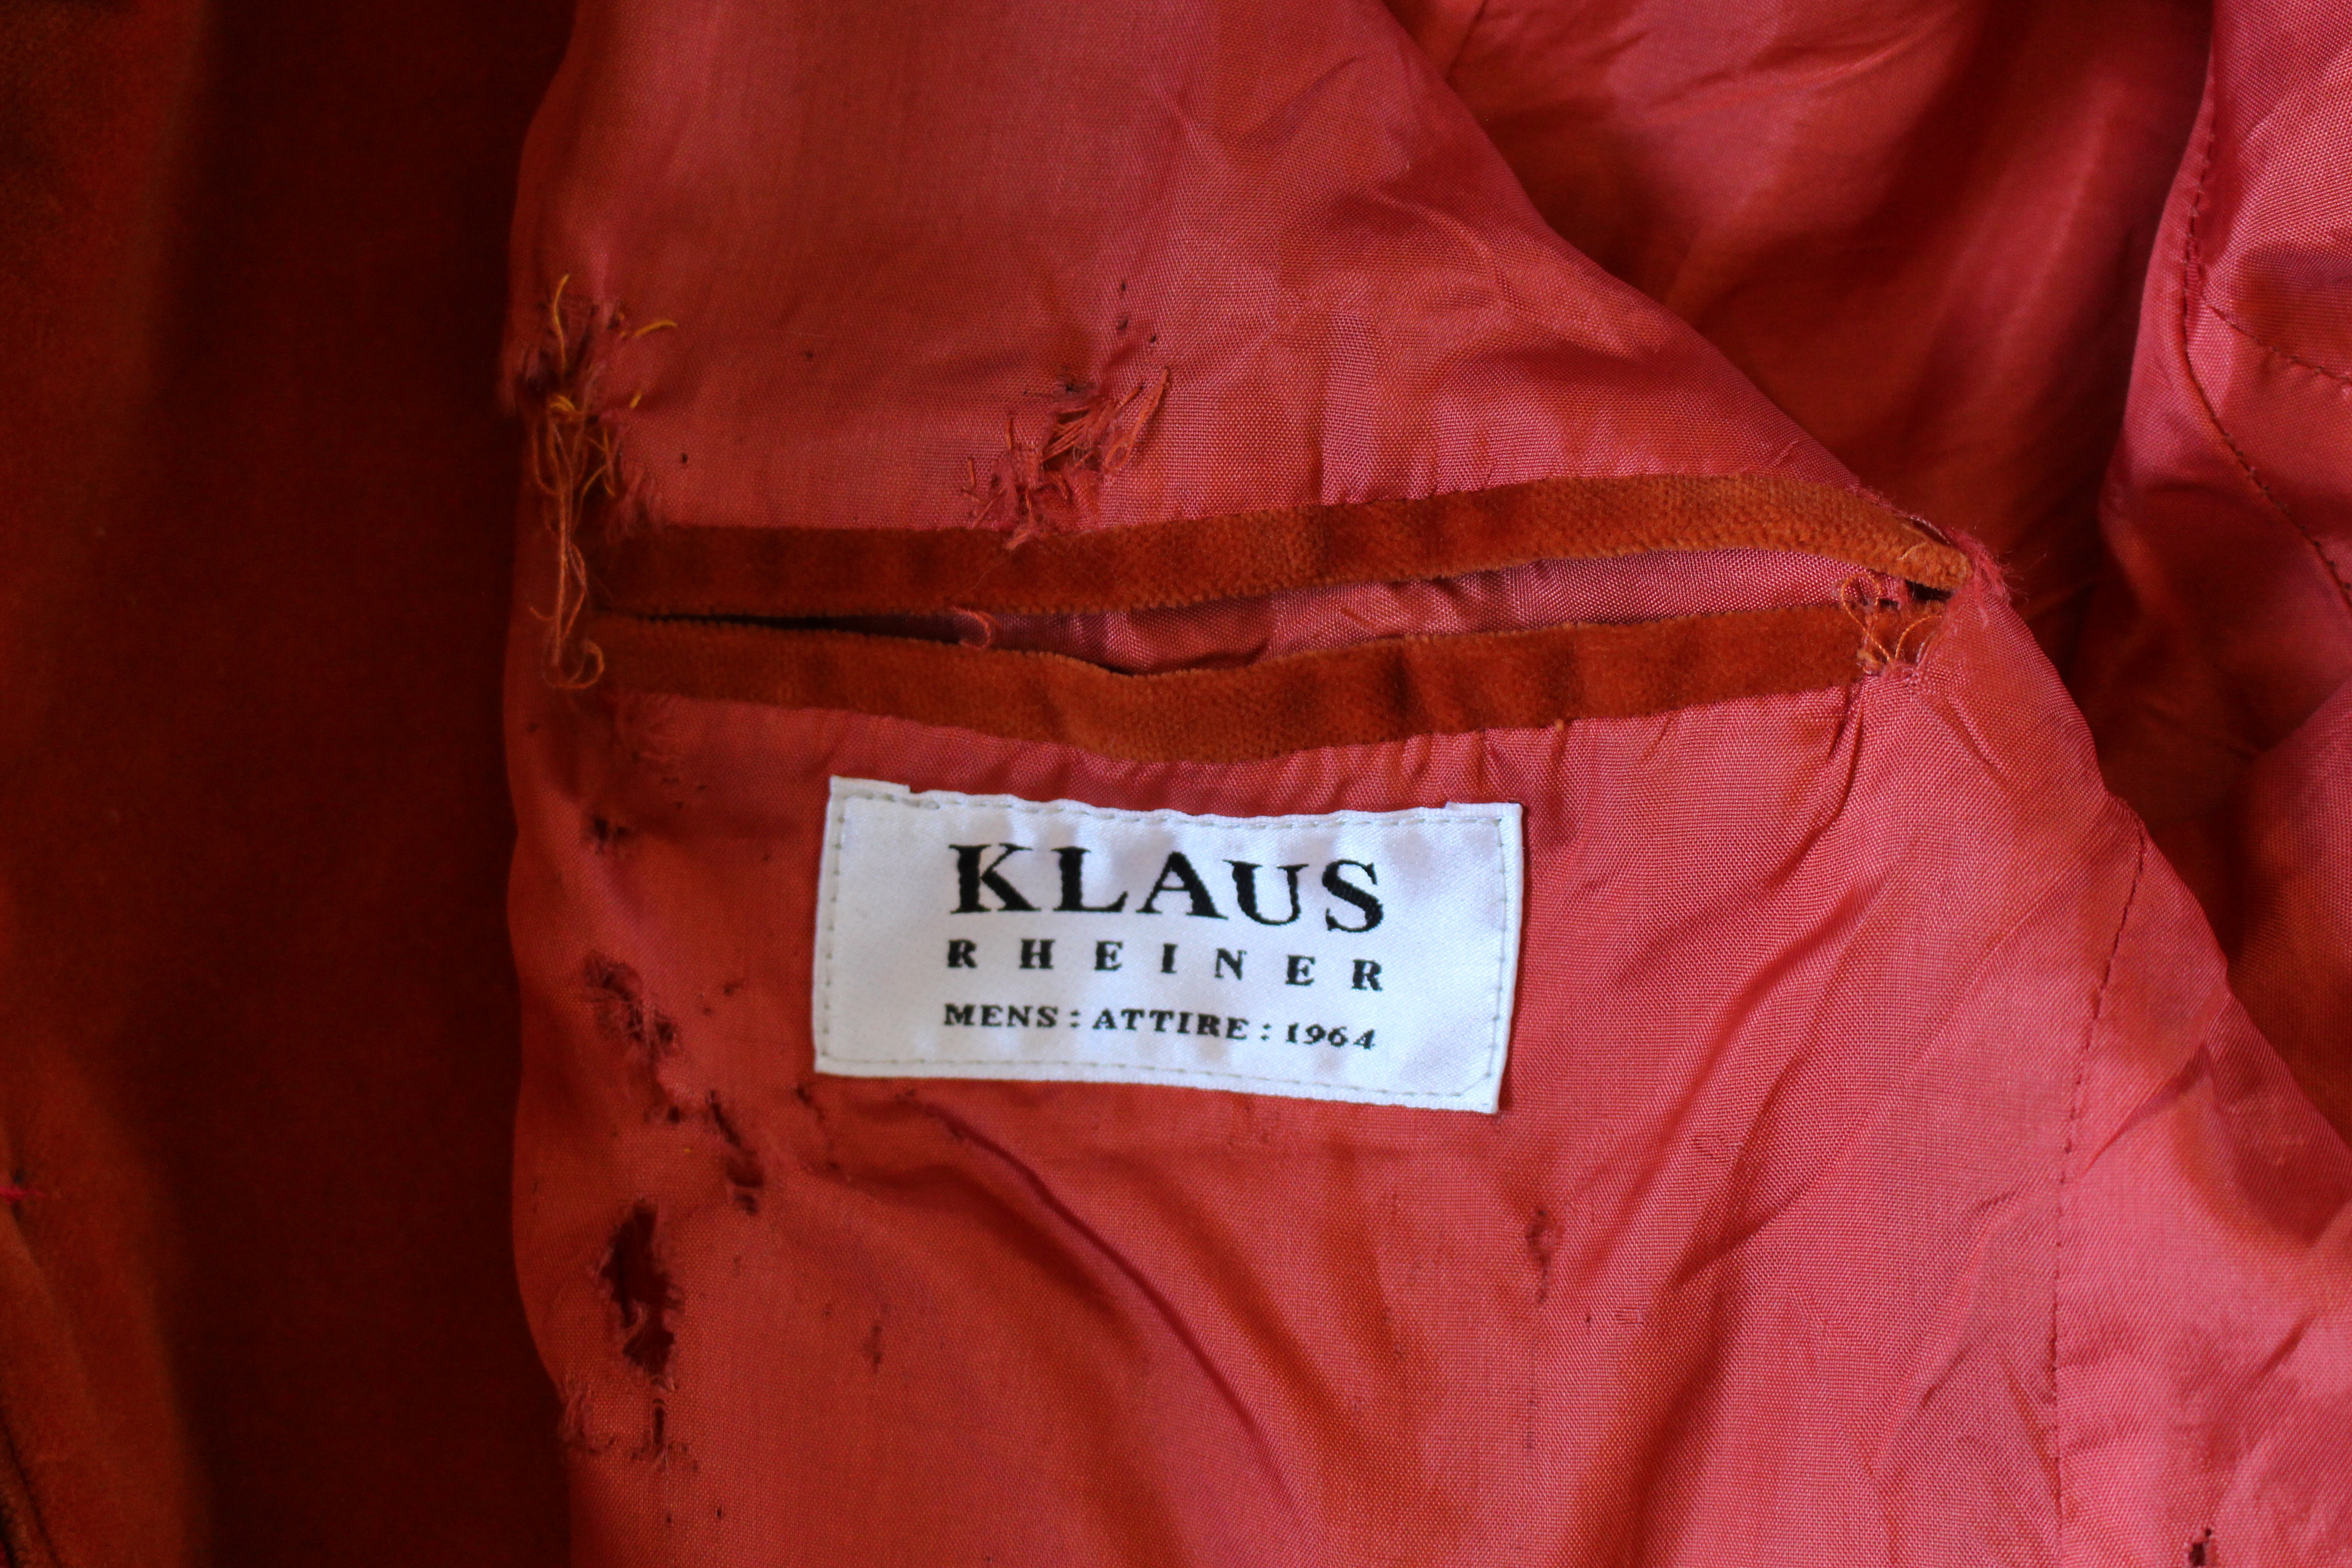 Klaus Rheiner orange velvet jacket, showing label